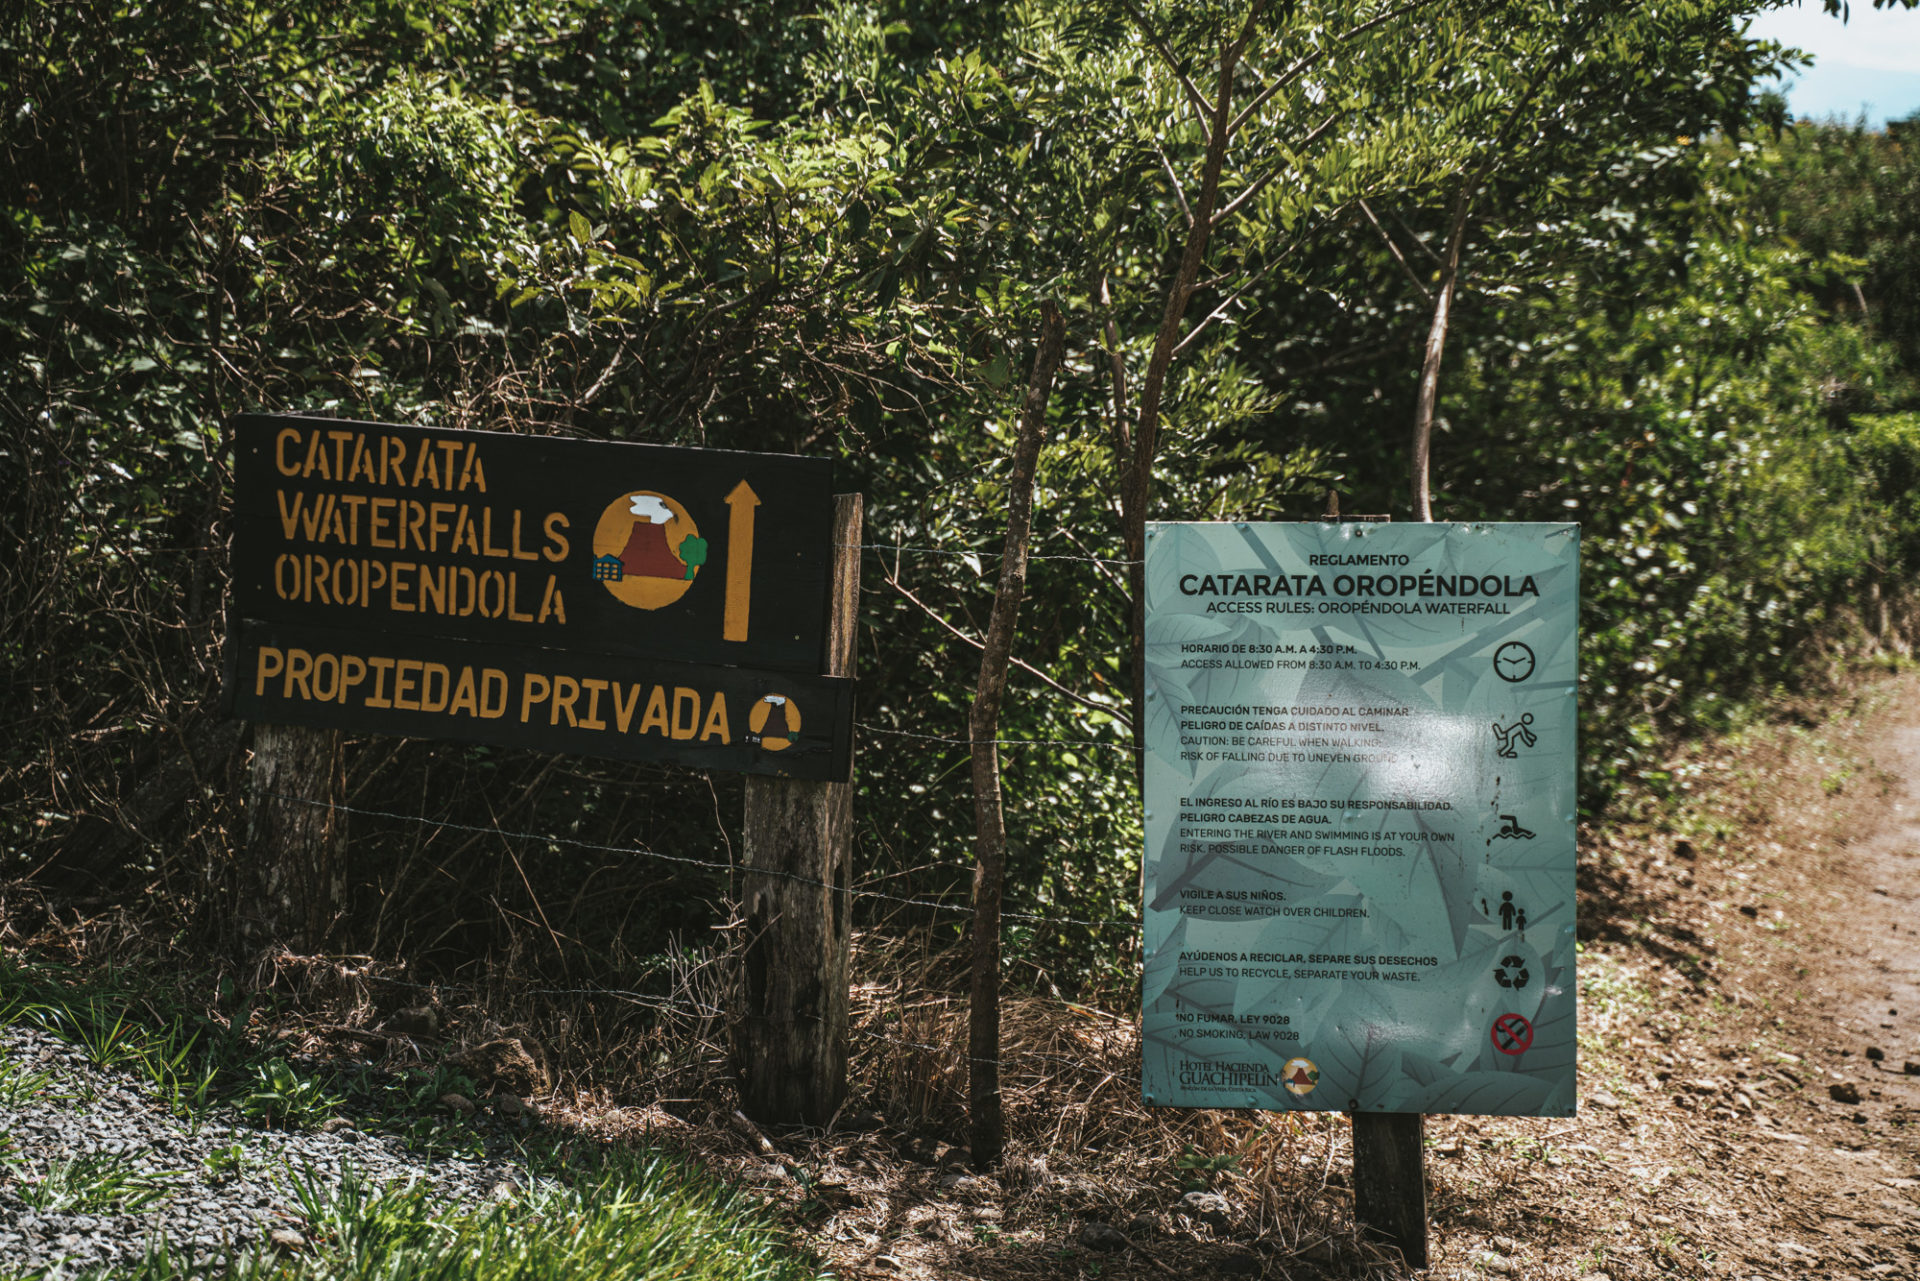 Oropendola Waterfall sign